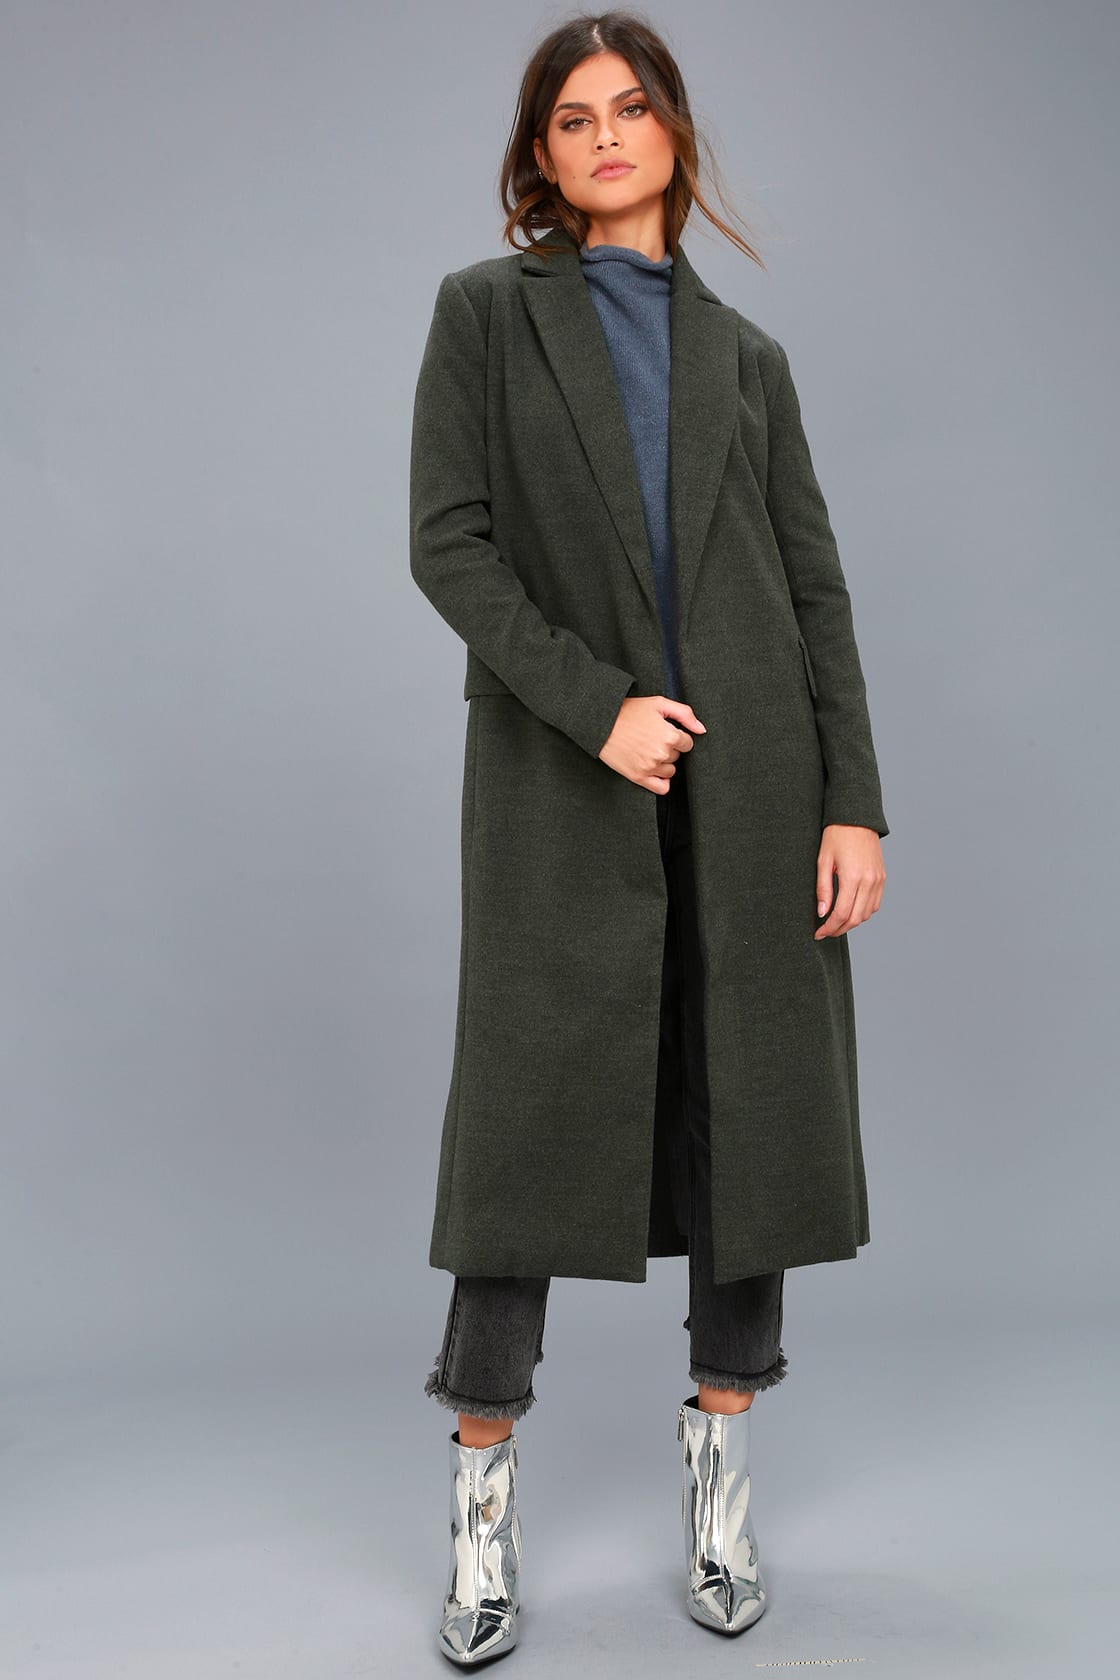 Chic Charcoal Grey Coat - Trench Coat - Cozy Coat - Lulus